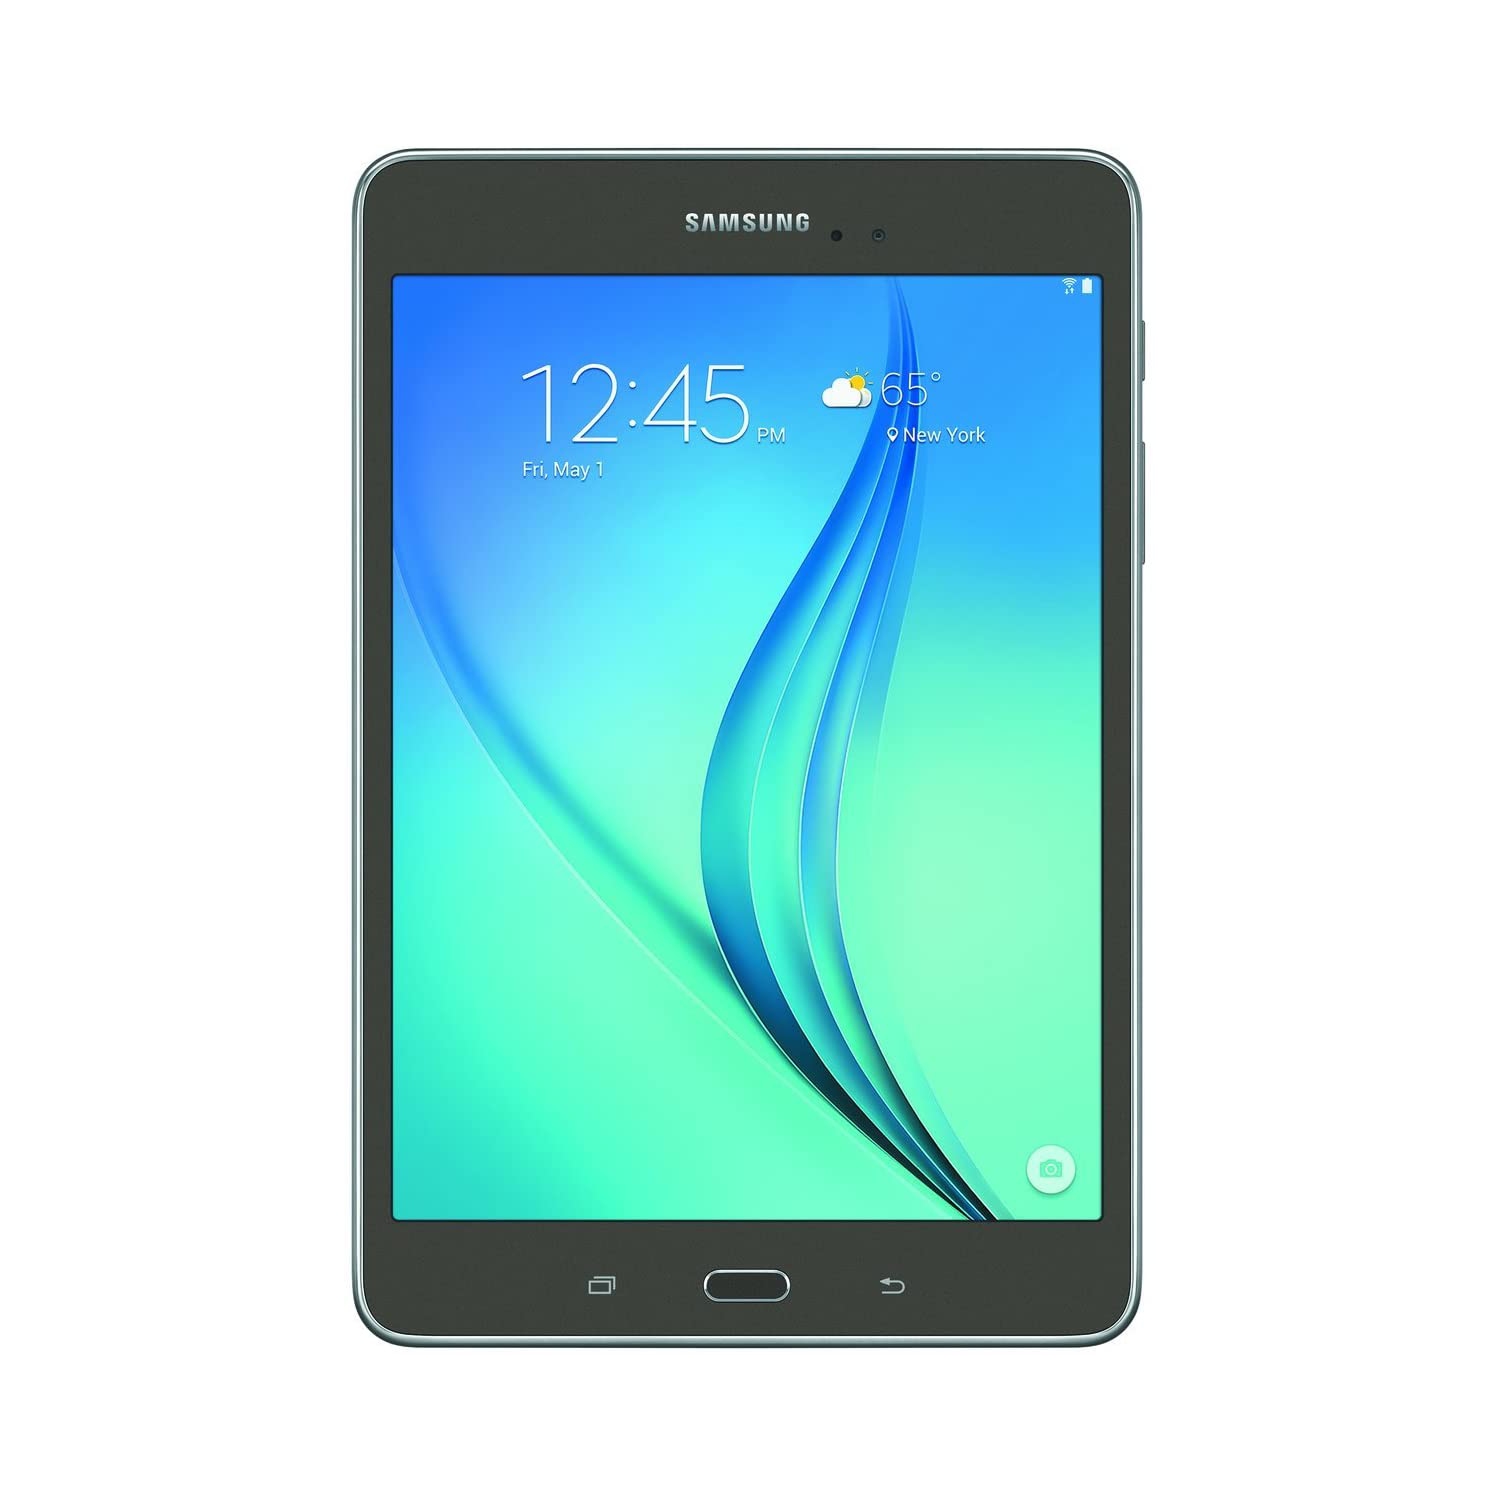 Refurbished (Good) - Samsung Galaxy Tab A SM-T350 8.0" 16 GB Android Tablet Titanium